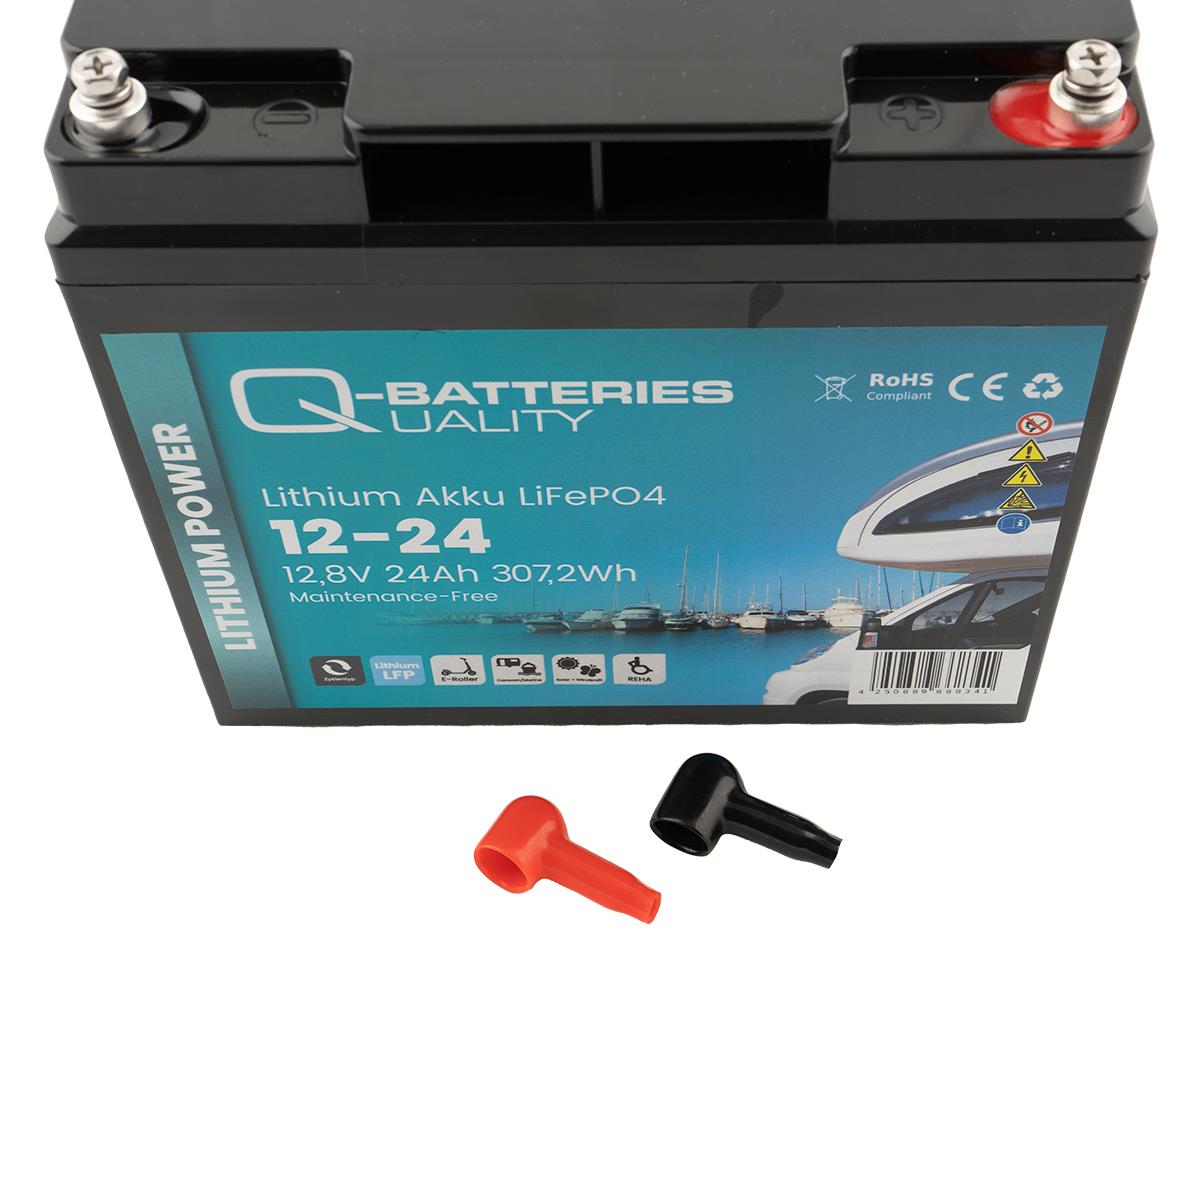 Q-Batteries Lithium Akku 12-24 12,8V 24Ah 307,2Wh LiFePO4 Batterie   